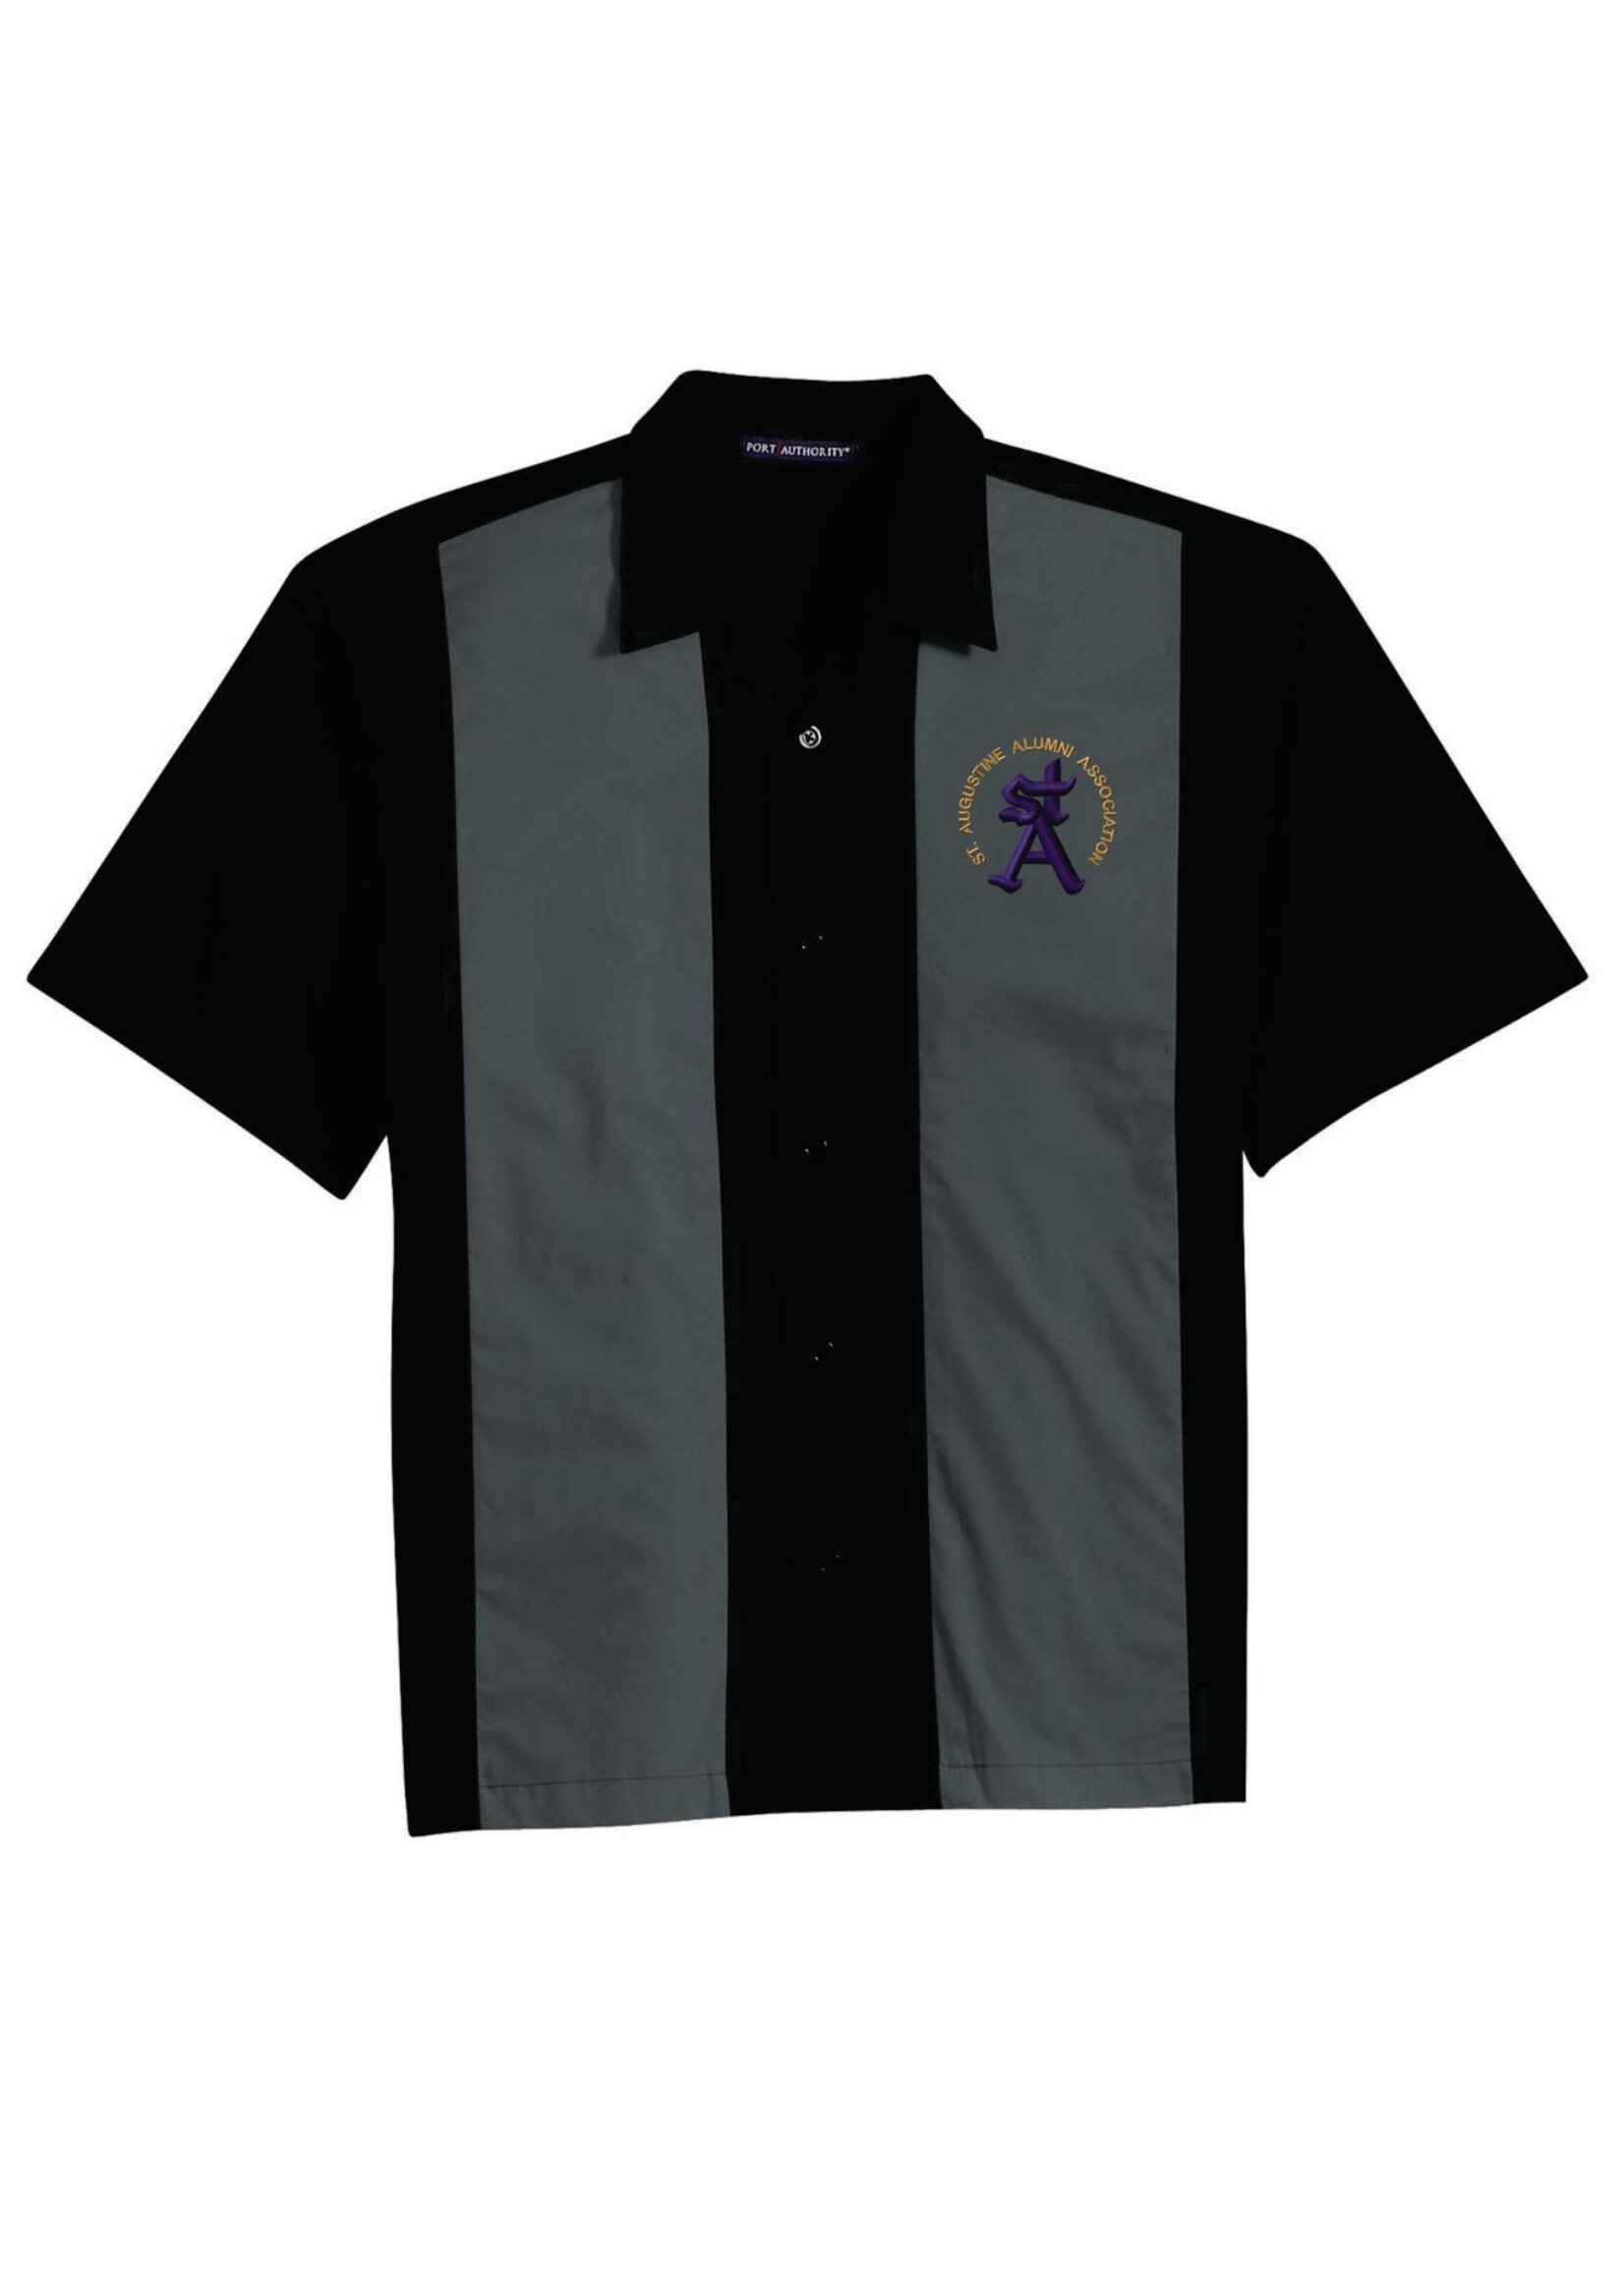 SAHS Alum Retro Camp Shirt Black/Steel Grey